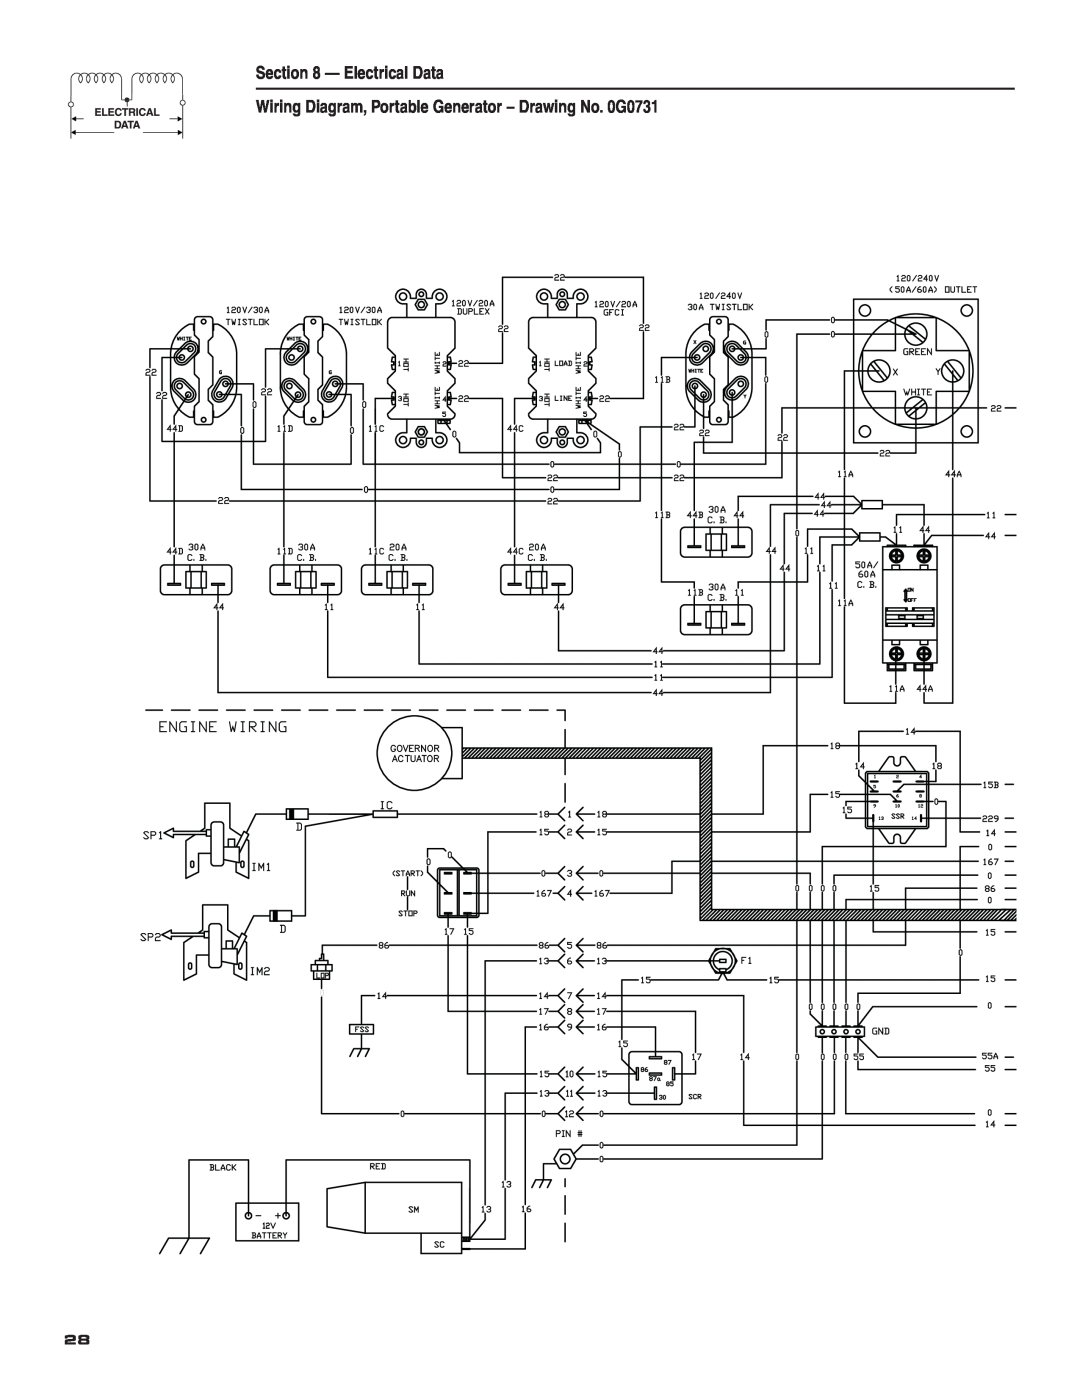 Guardian Technologies 004583-0 Electrical Data, Wiring Diagram, Portable Generator - Drawing No. 0G0731, Engine Wiring 